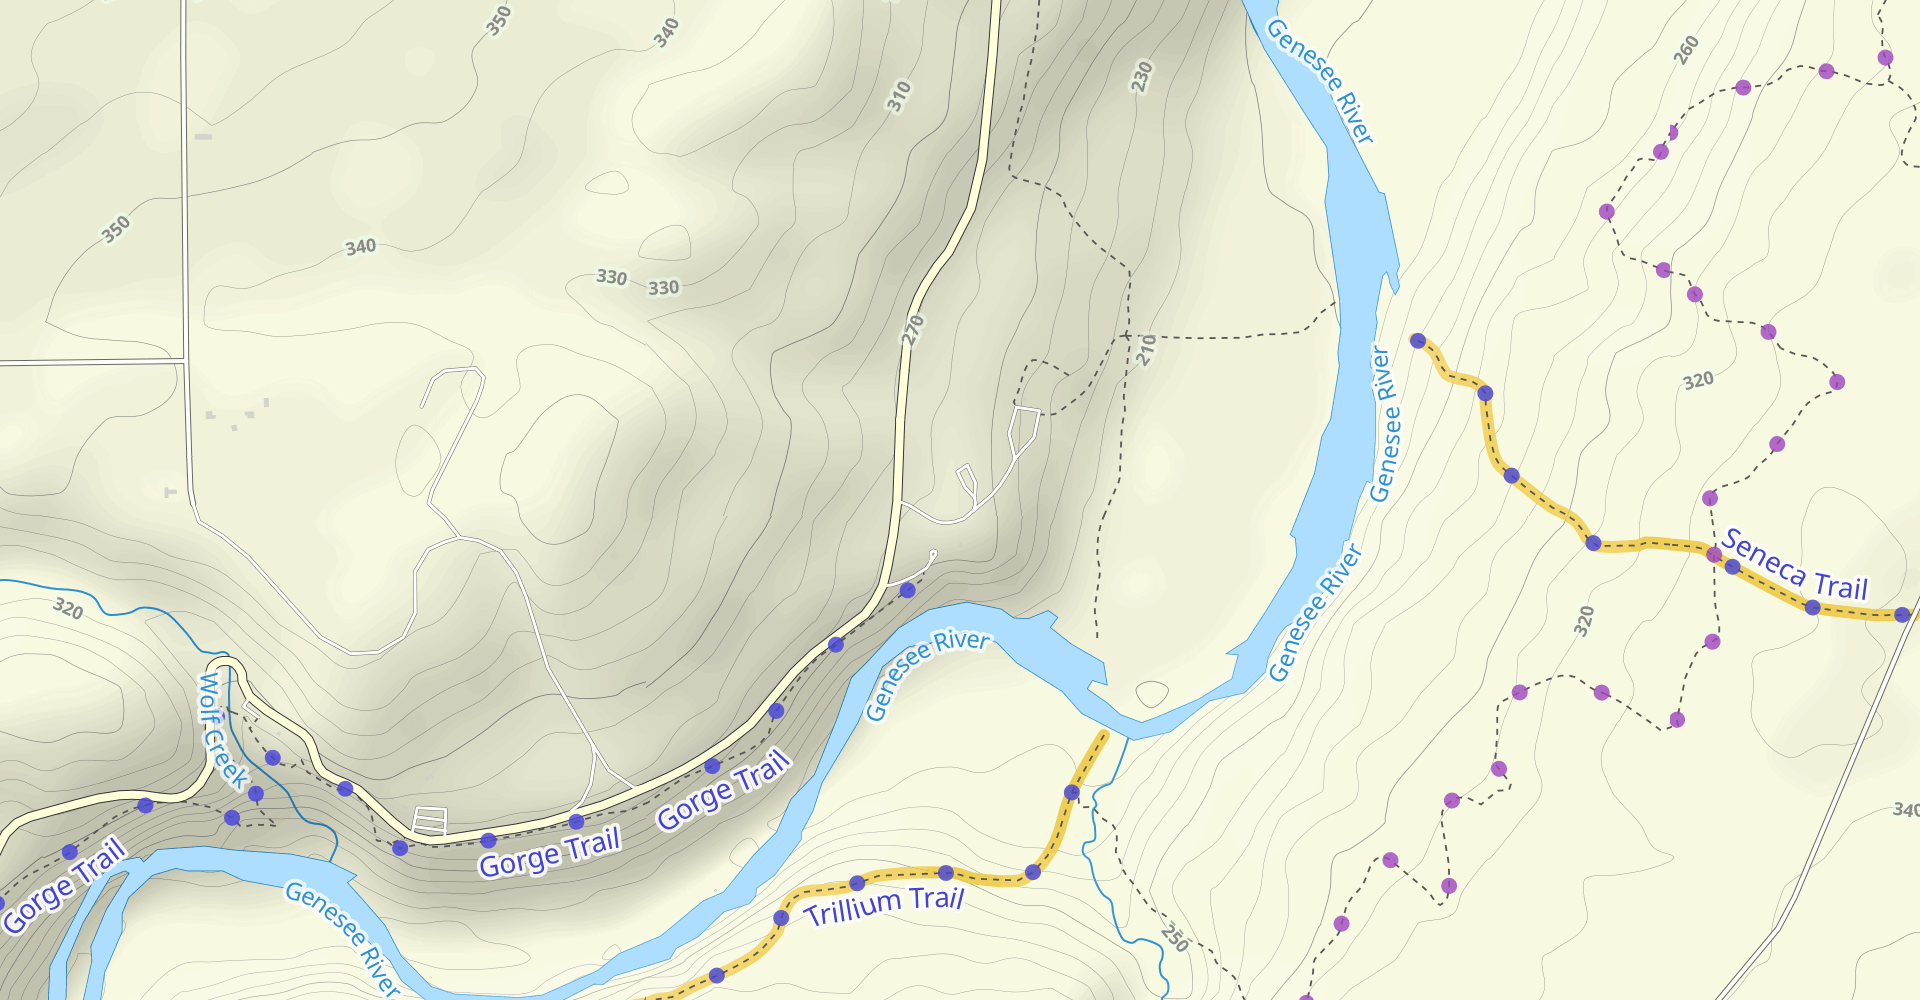 Genesee River Gorge Trail